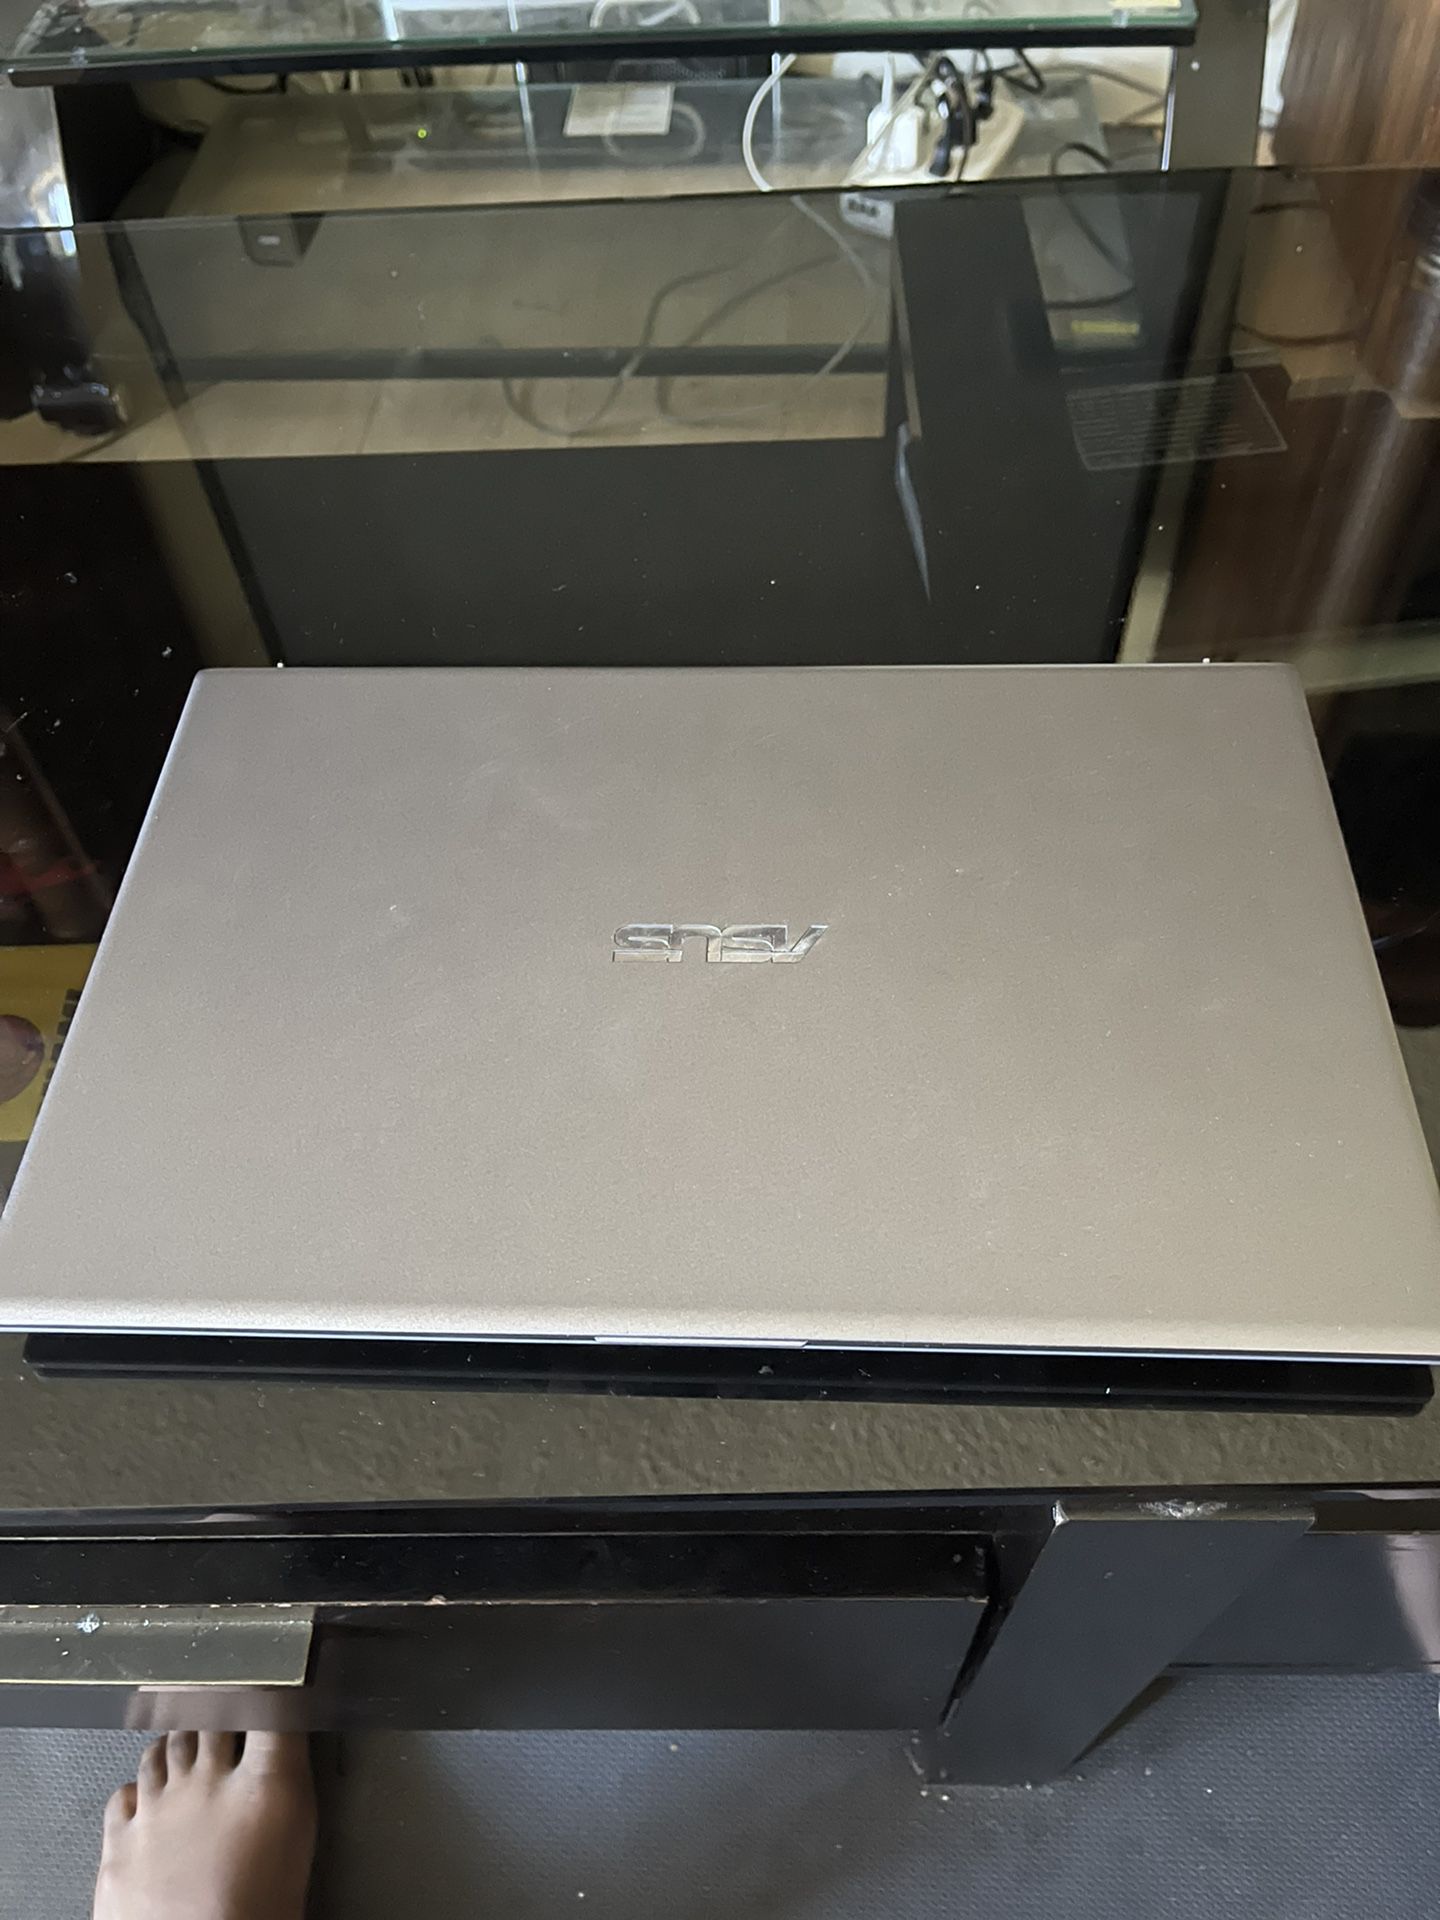 Asus Vivobook Laptop